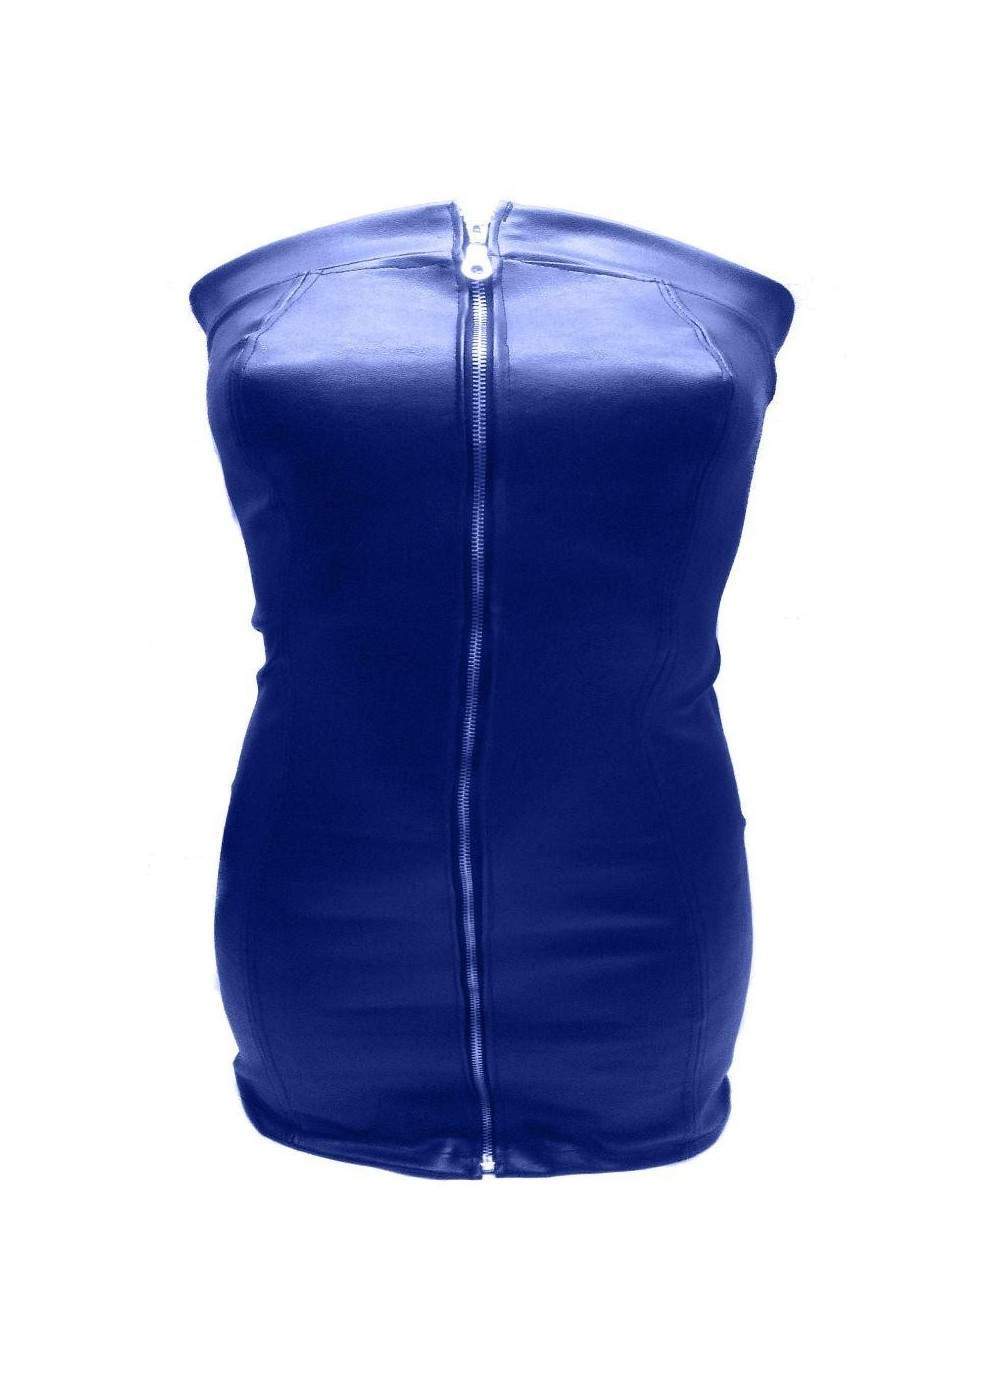 Designer leather dress blue size L - XXL (44 - 52) 35,00 € - 